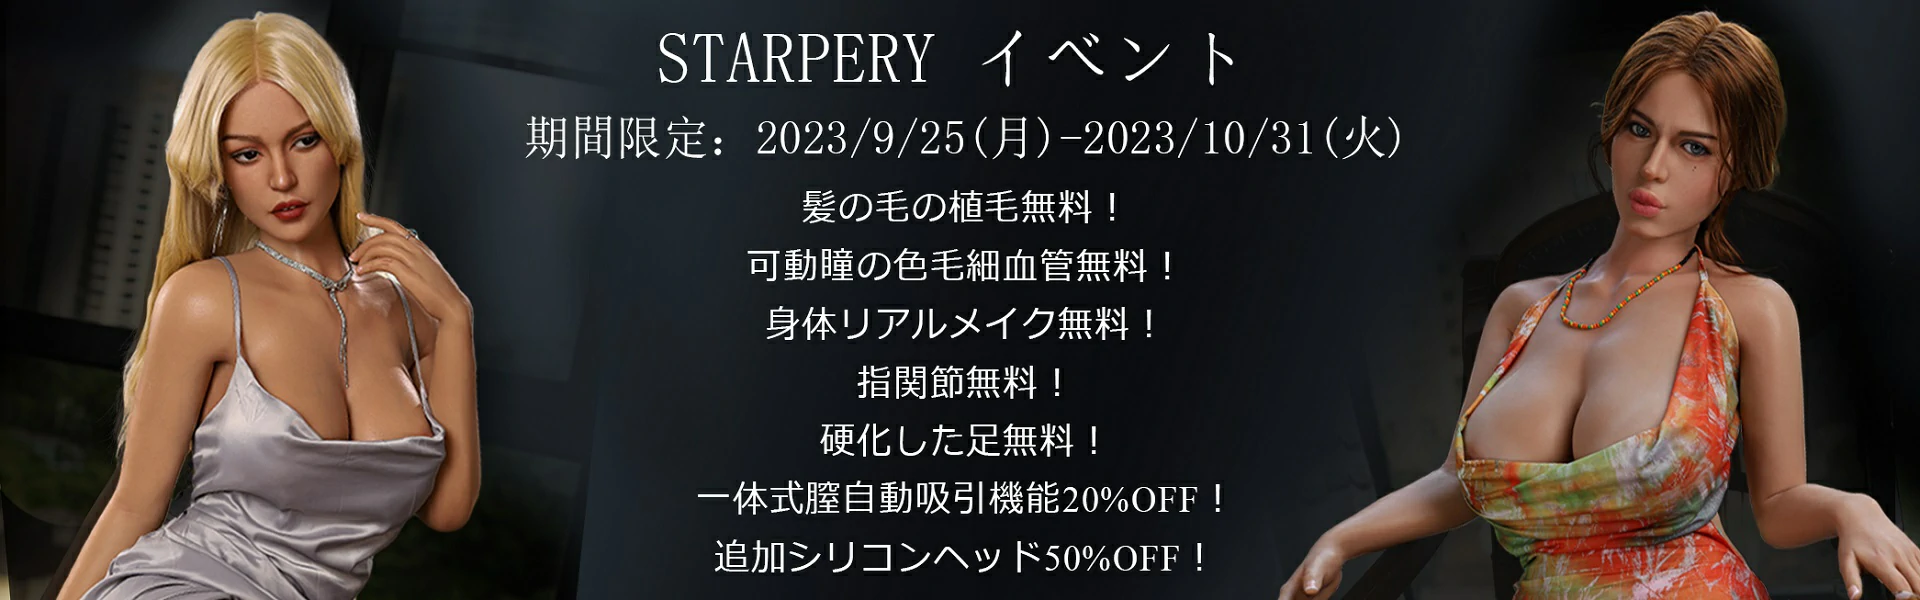 Starpery 10月キャンペーン